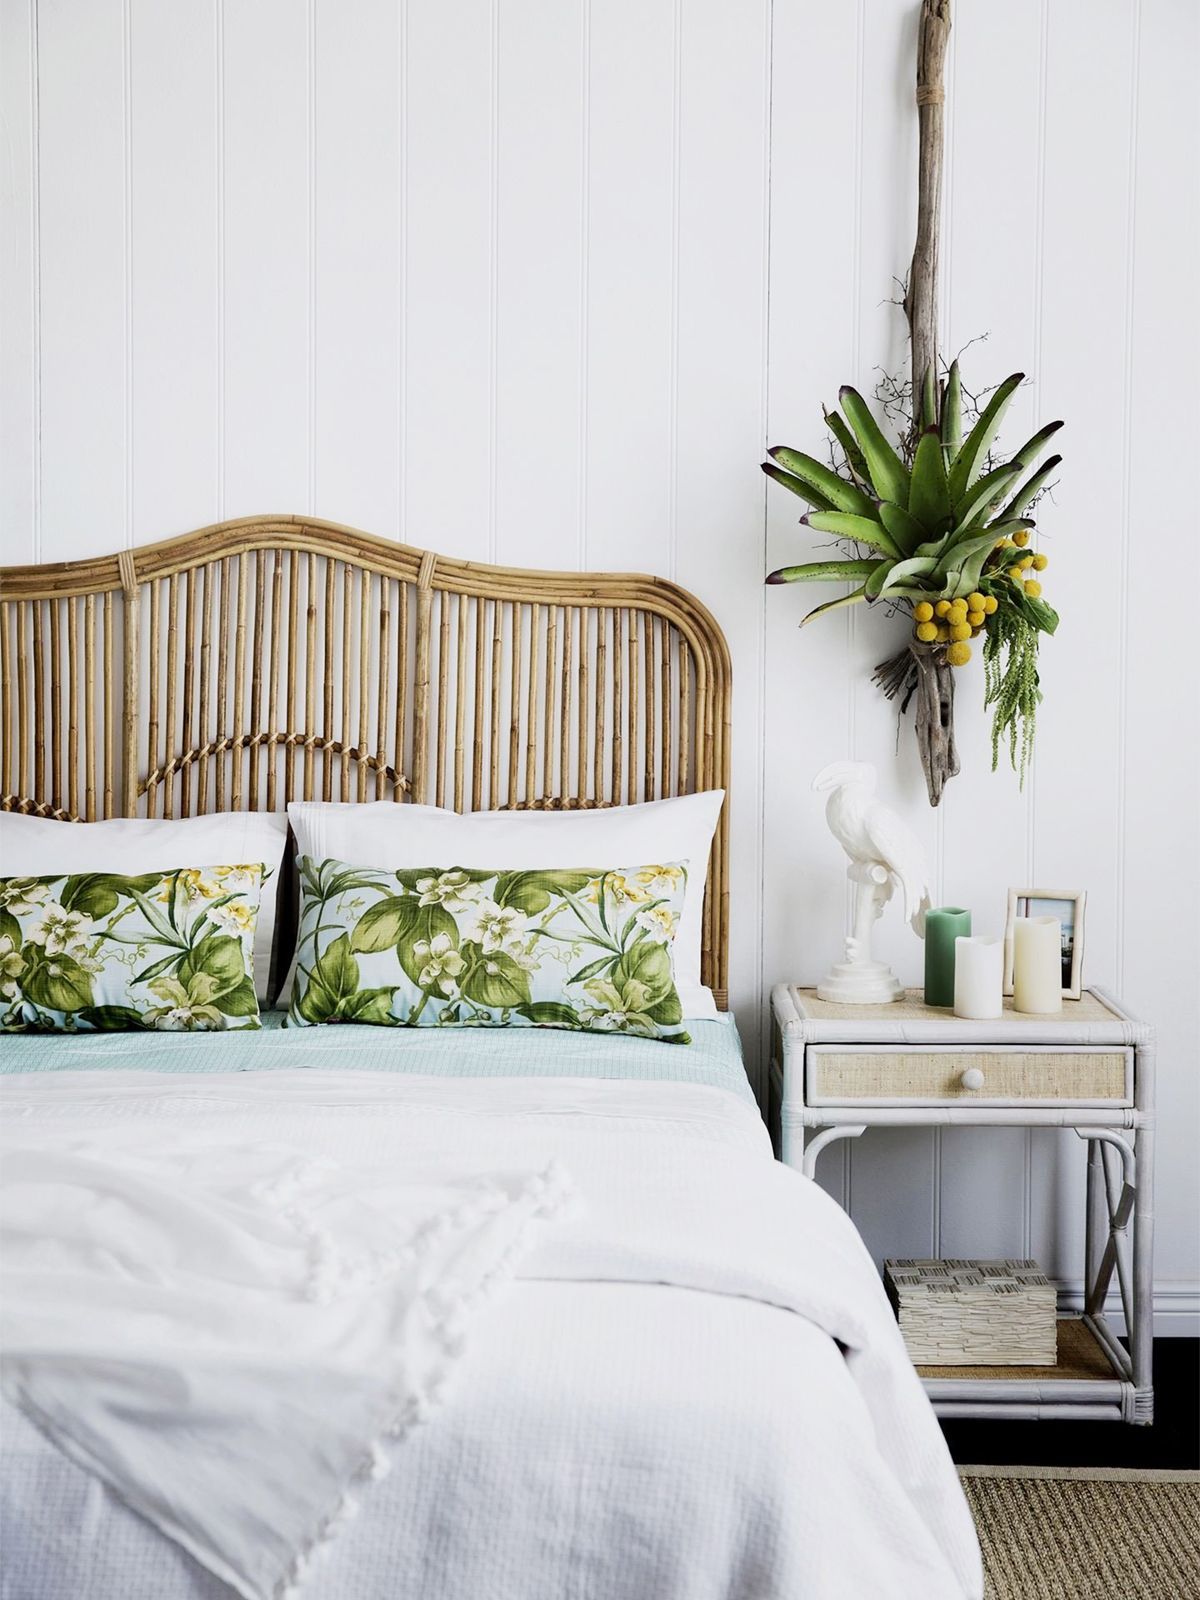 rattan-furniture-tropical-decor-bedroom-with-rattan-headboard-and-palm-leaf-pillows-via-homestolove_com_au.jpg